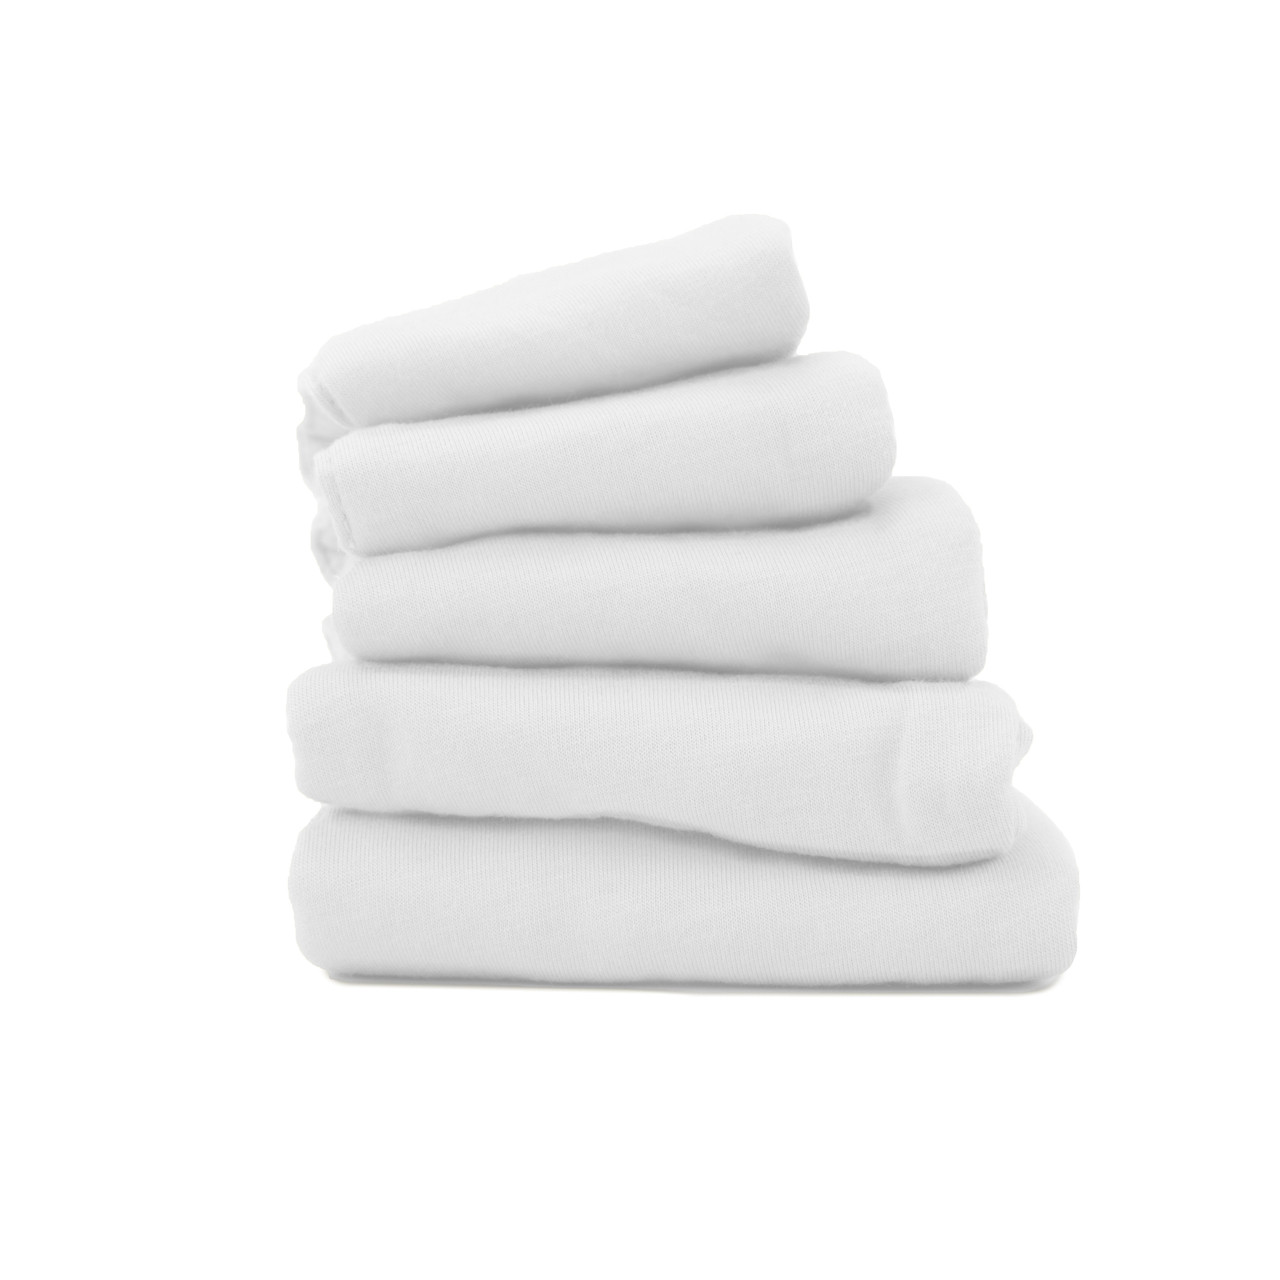 Plush Bamboo Bra Liner (70% Bamboo Rayon + 30% Cotton) - 3-Pack, Medium,  White at  Women's Clothing store